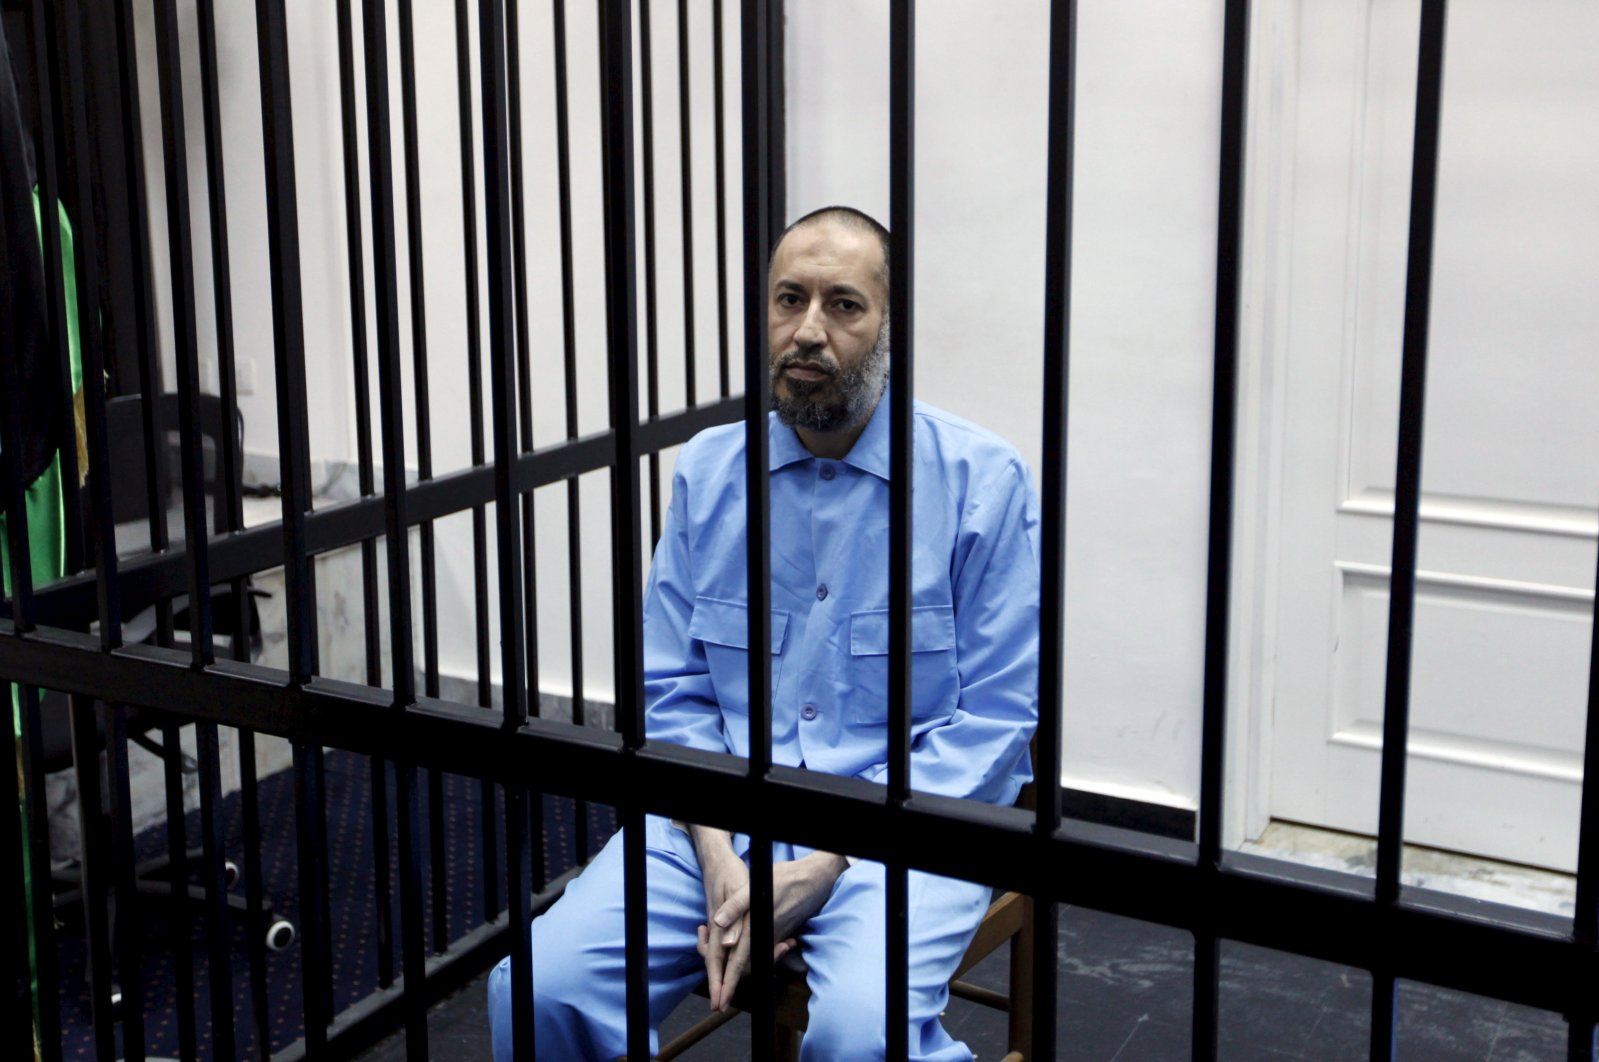 Saadi Gadhafi, son of Moammar Gadhafi, sits behind bars during a hearing at a courtroom in Tripoli, Libya, Feb. 7, 2016. (Reuters Photo)